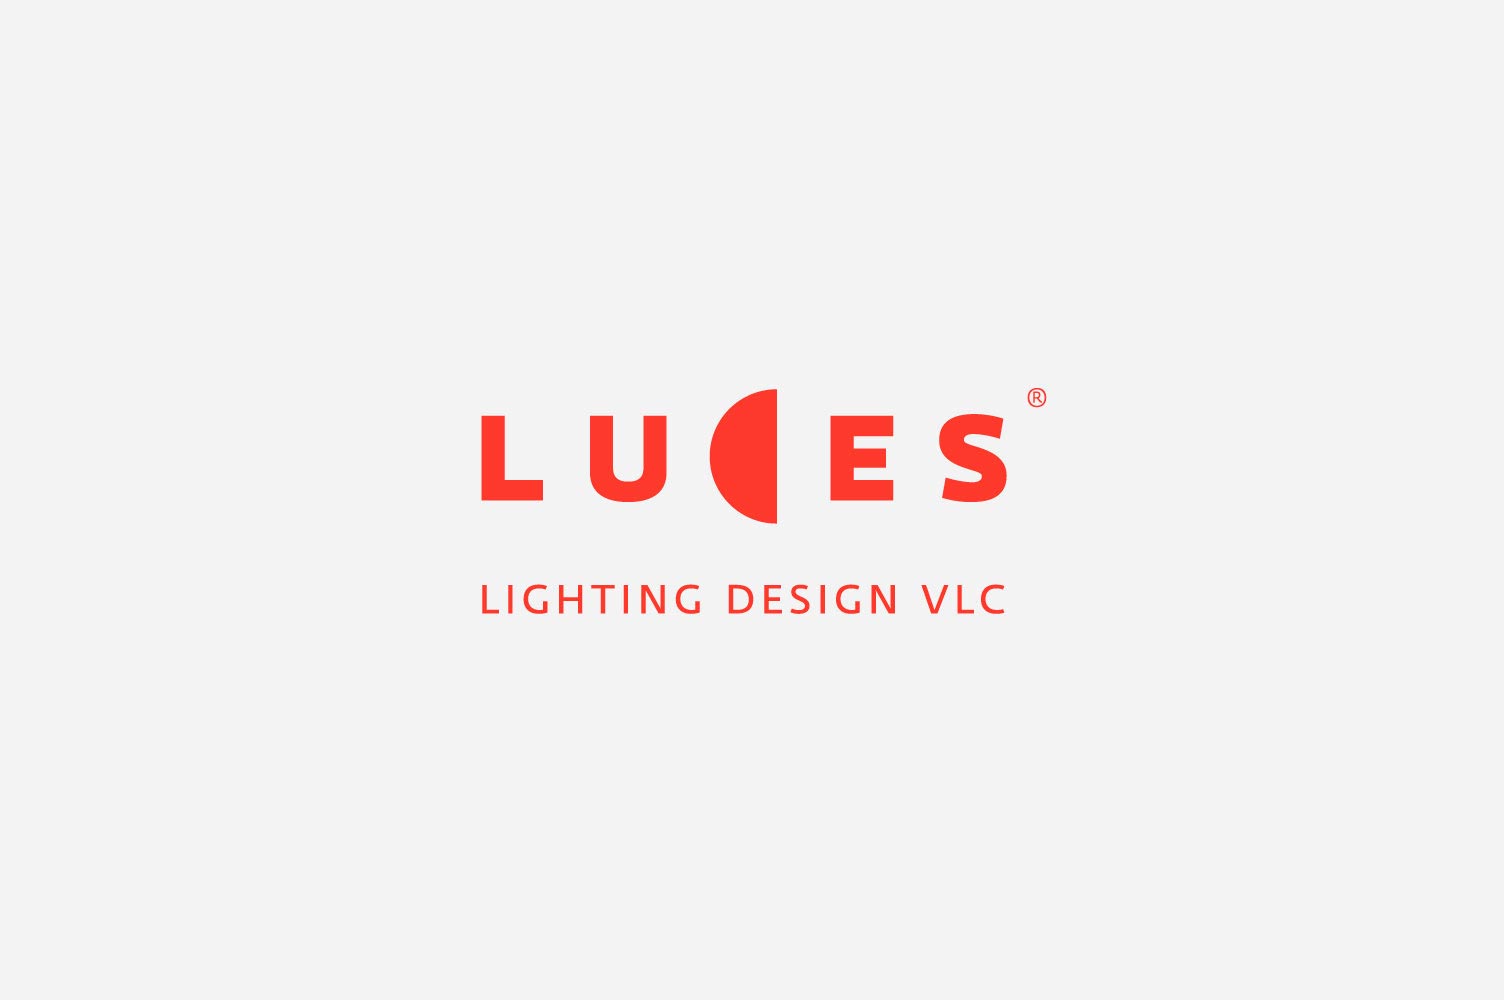 Rediseño de logotipo Luces v.1